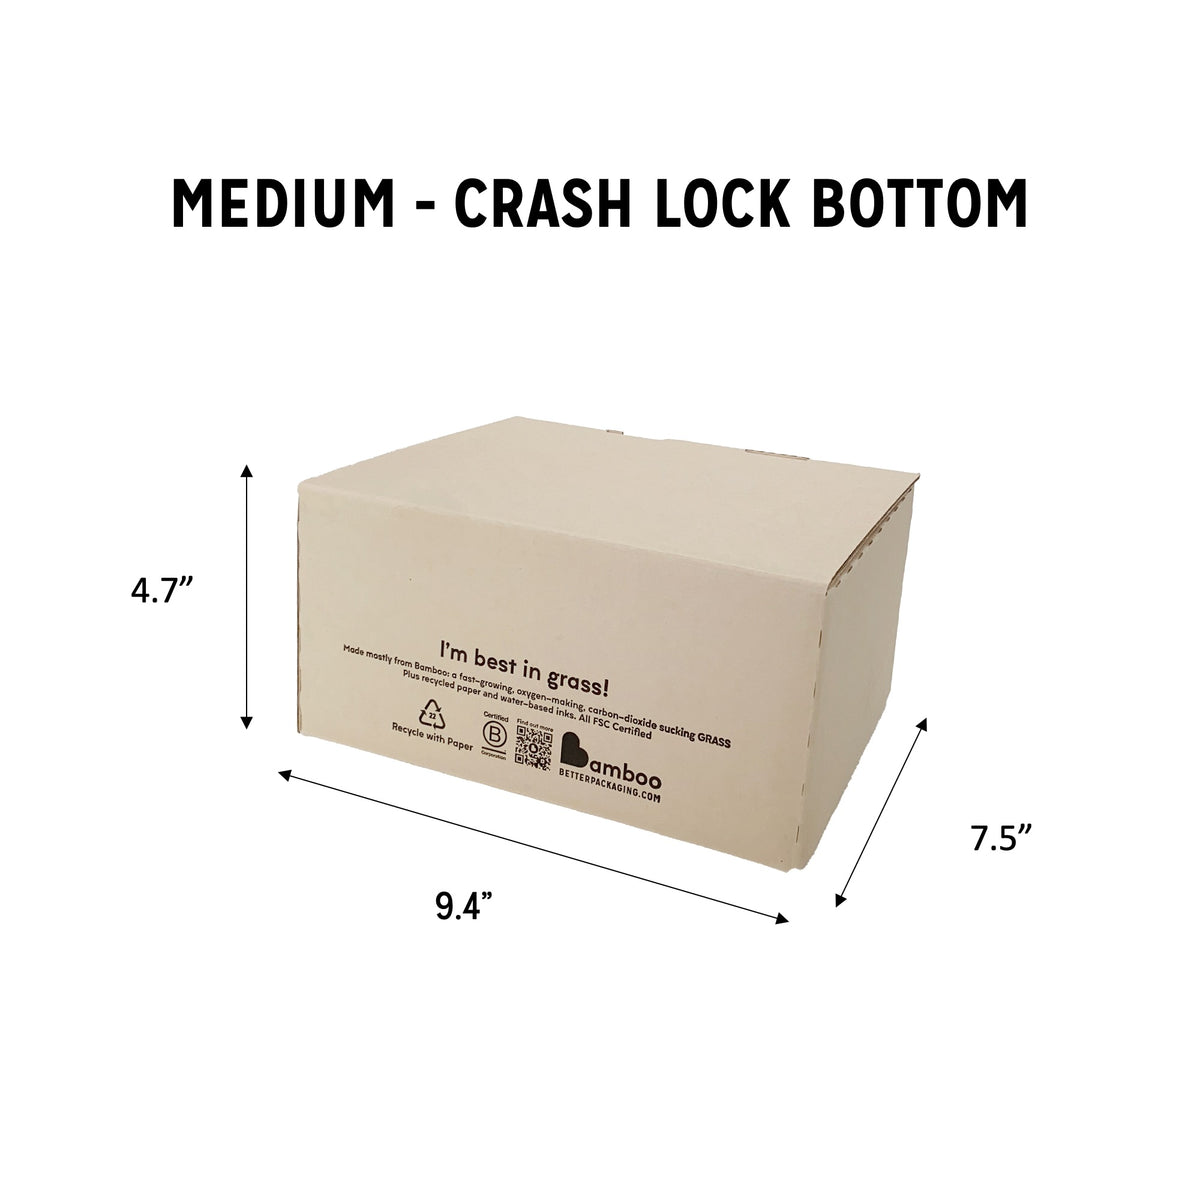 Medium sized crash lock Better Packaging bamboo box. 4.7&quot; high, 9.4&quot; wide, 7.5&quot; deep